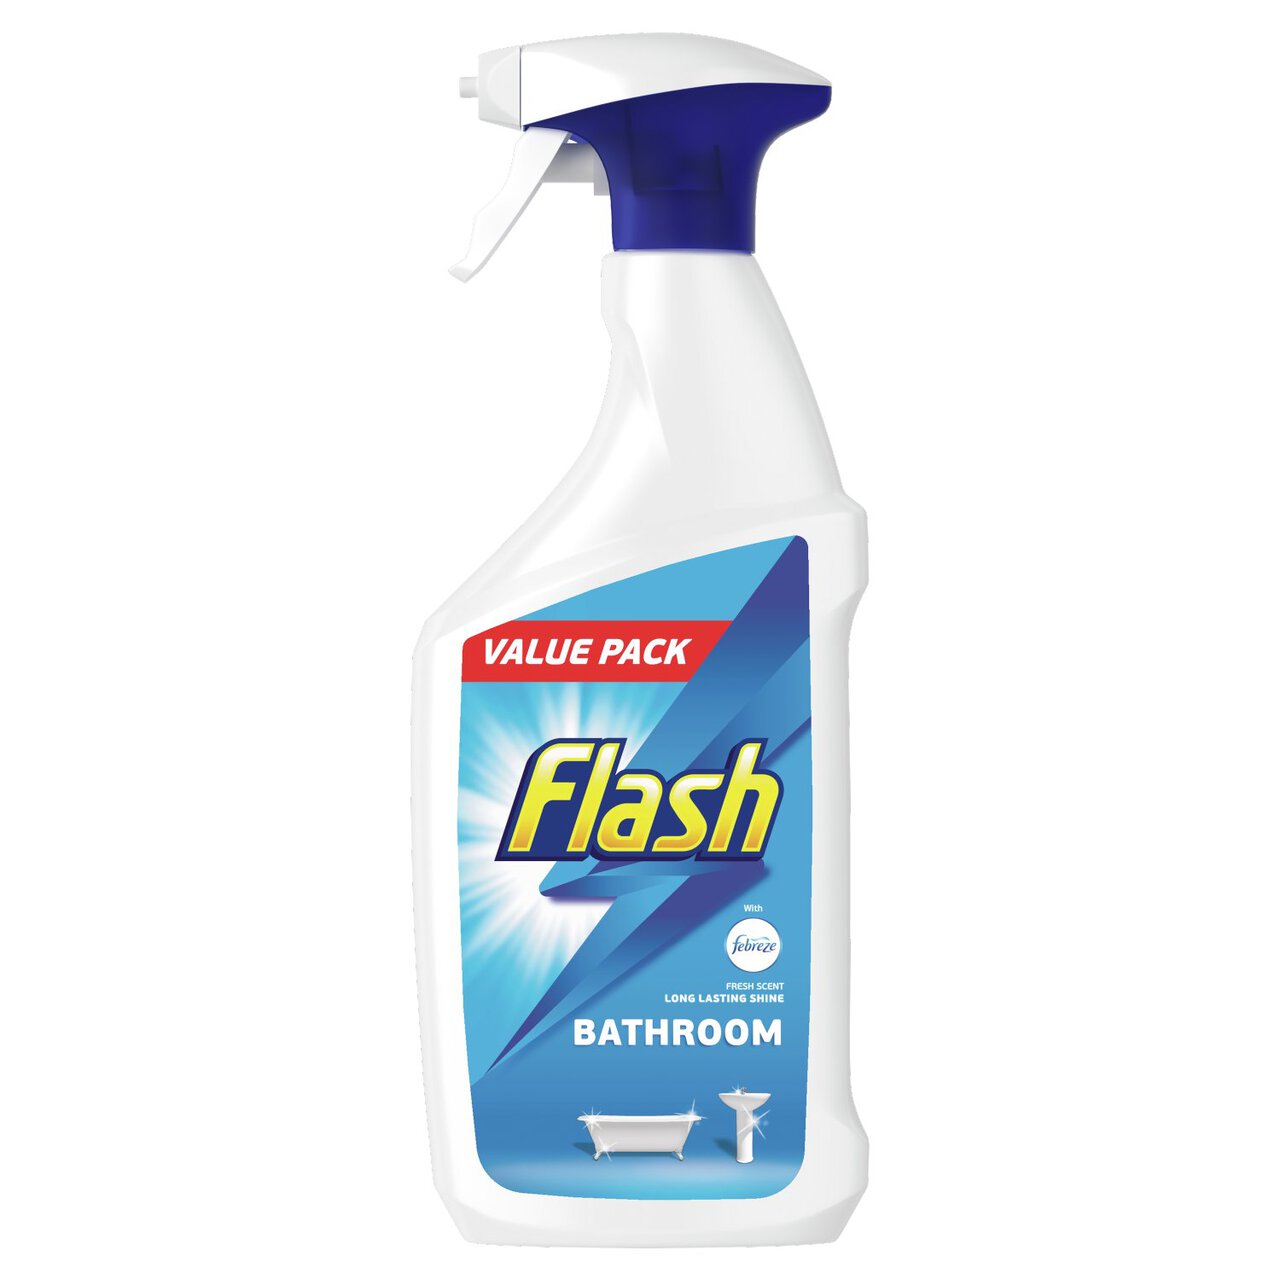 Flash Bathroom Spray Cleaner with Febreze 750ml